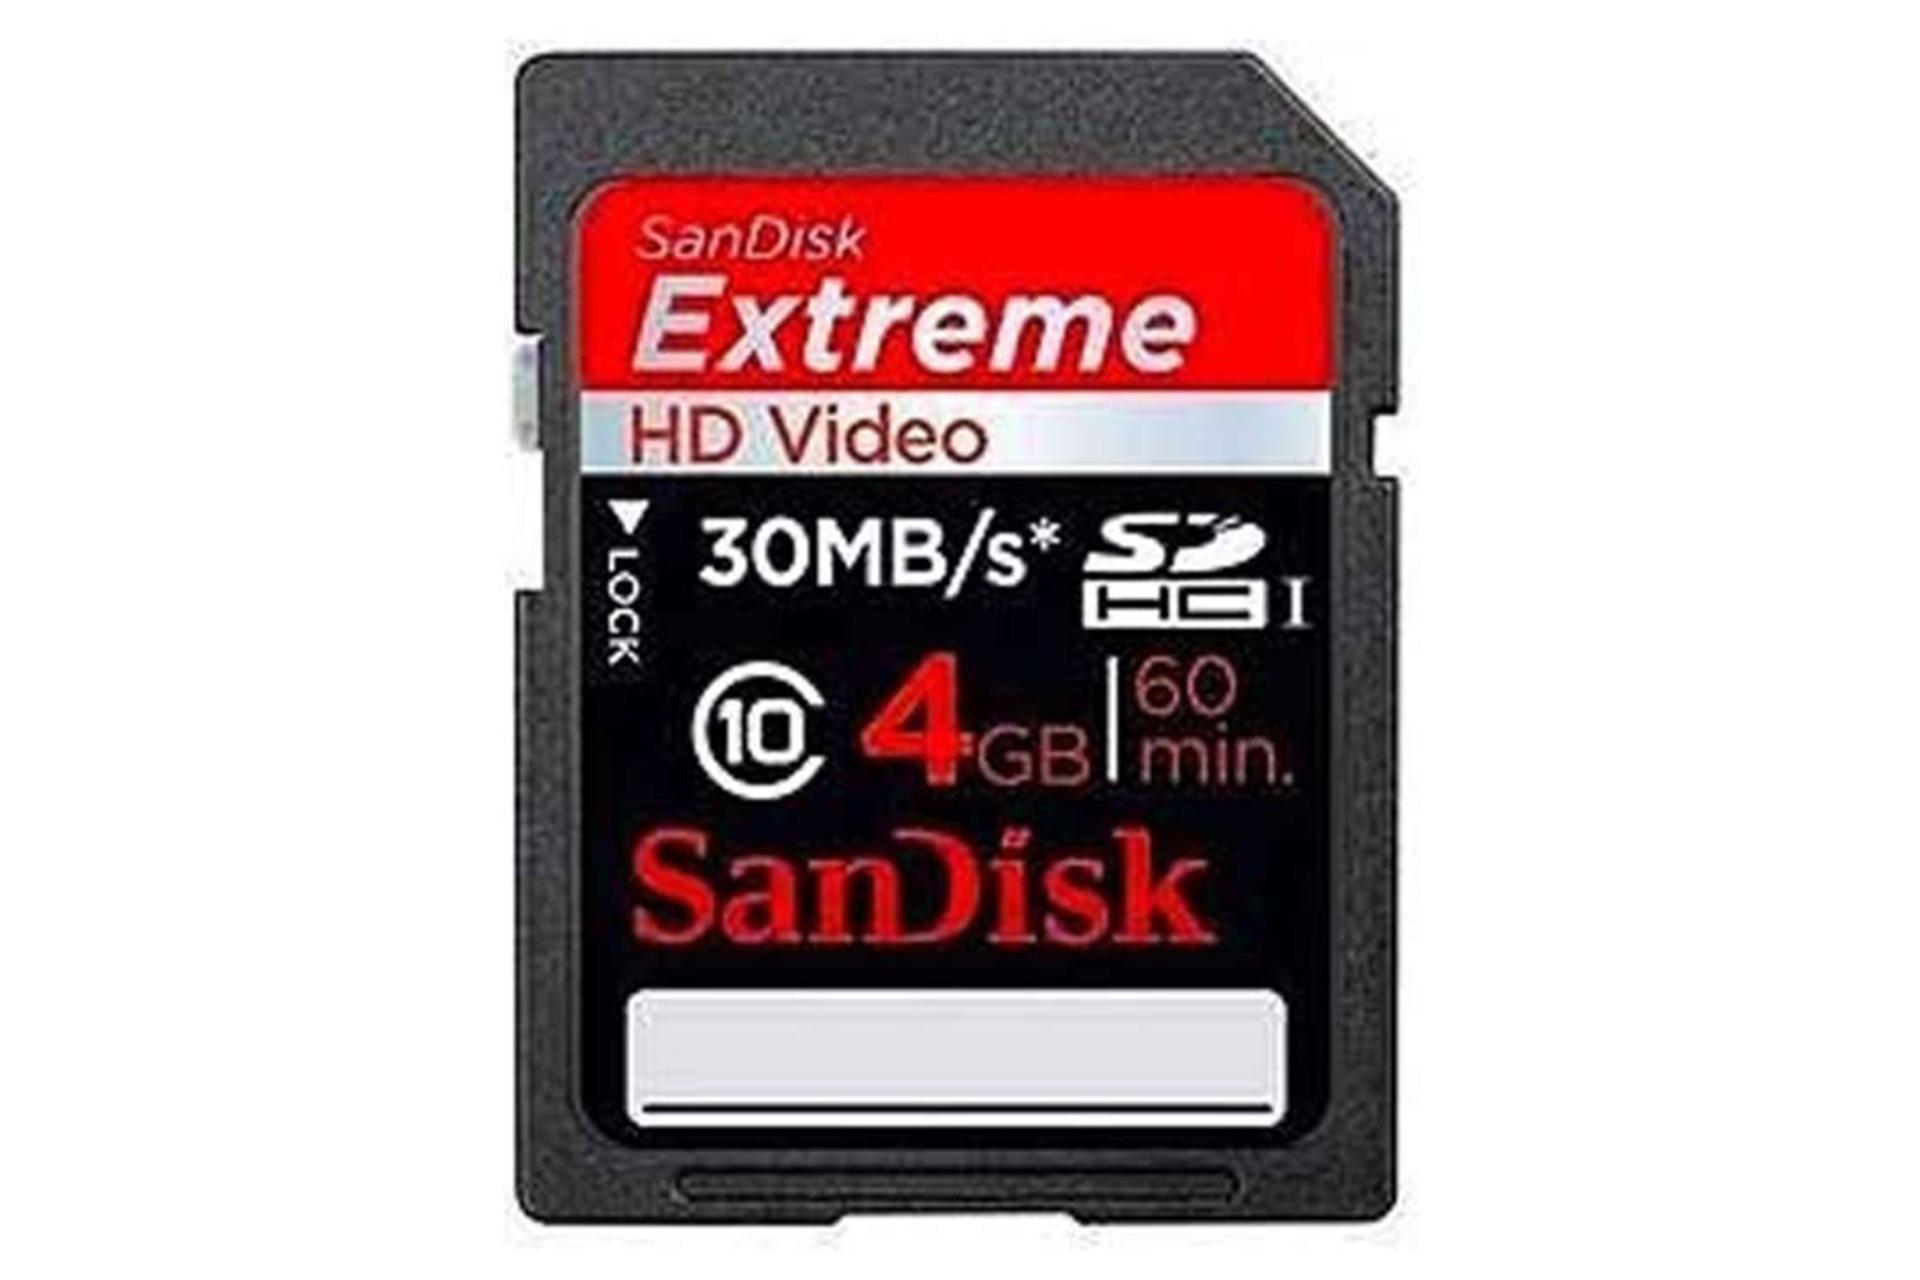 SanDisk Extreme HD Video SDHC Class 10 UHS-I U1 4GB